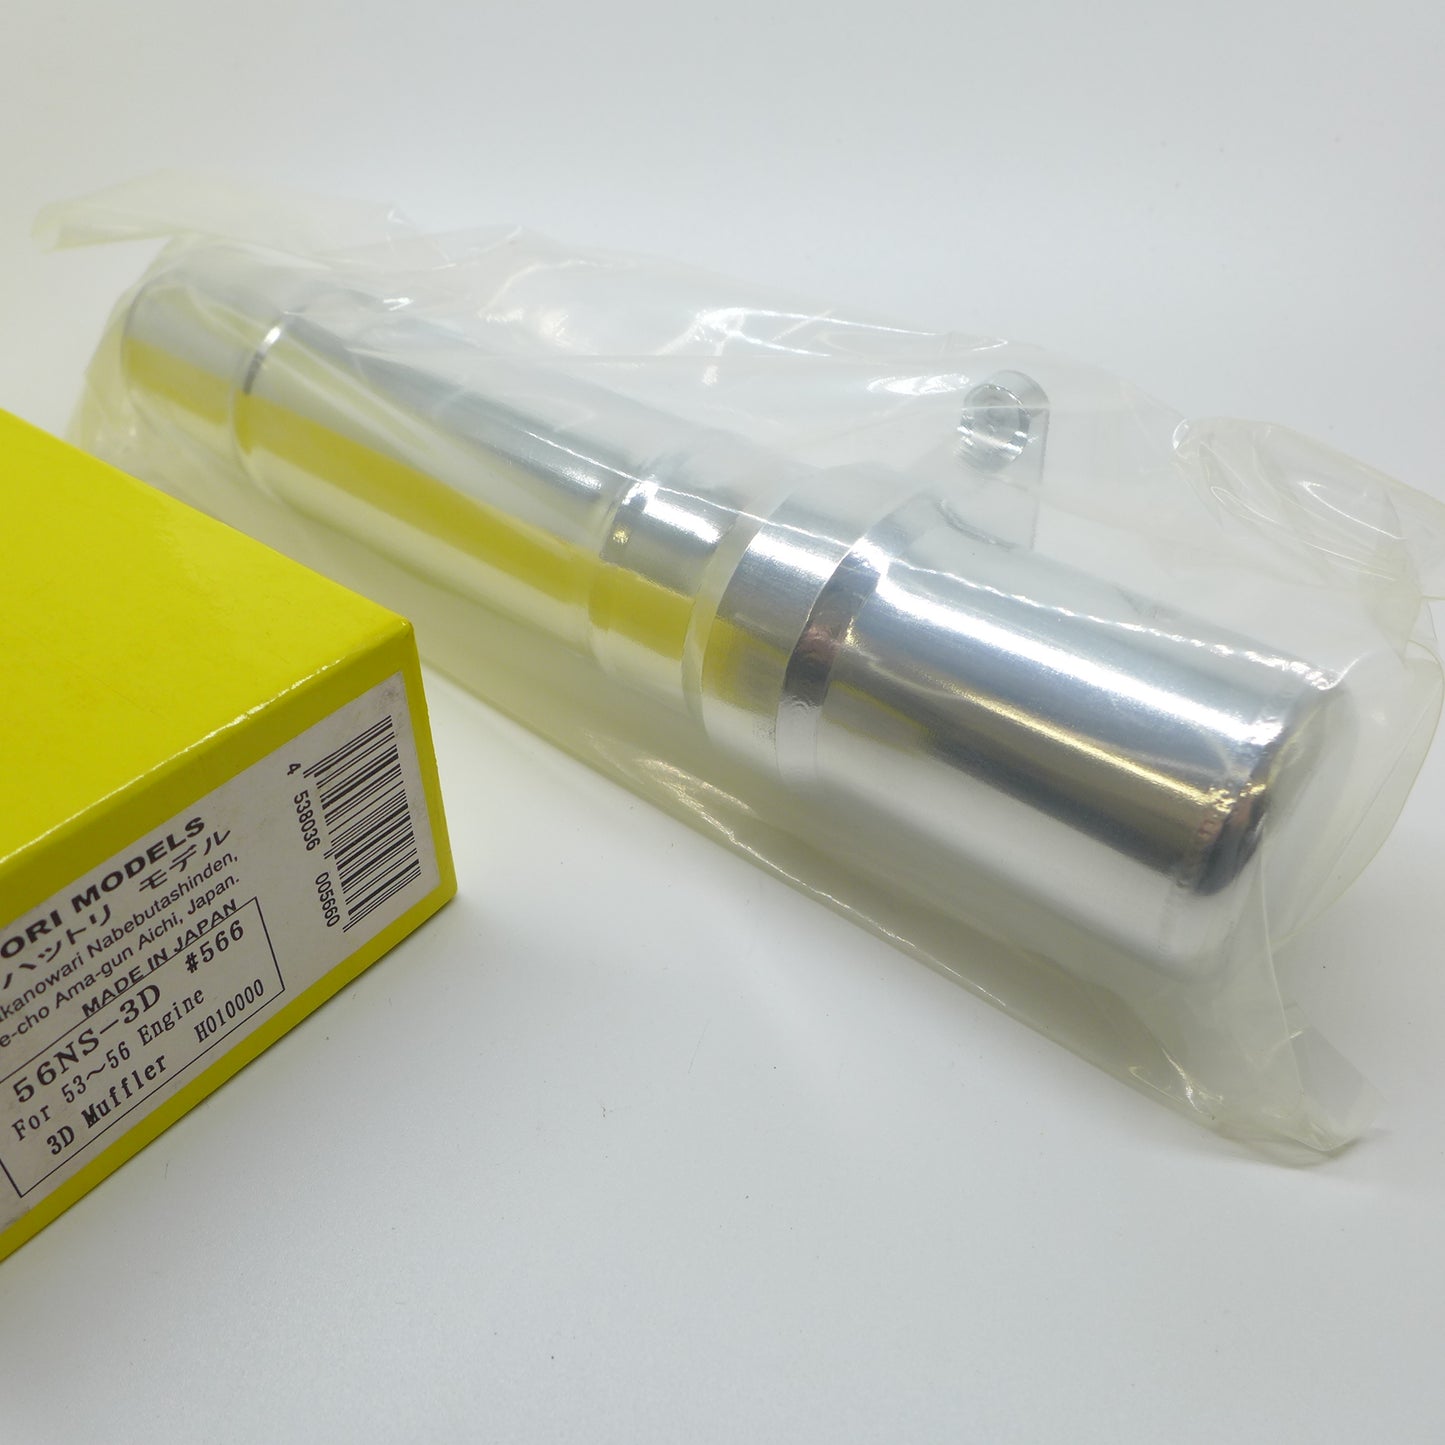 Hatori Schalldämpfer / Resorohr #566 56NS-3D Muffler (Made in Japan)